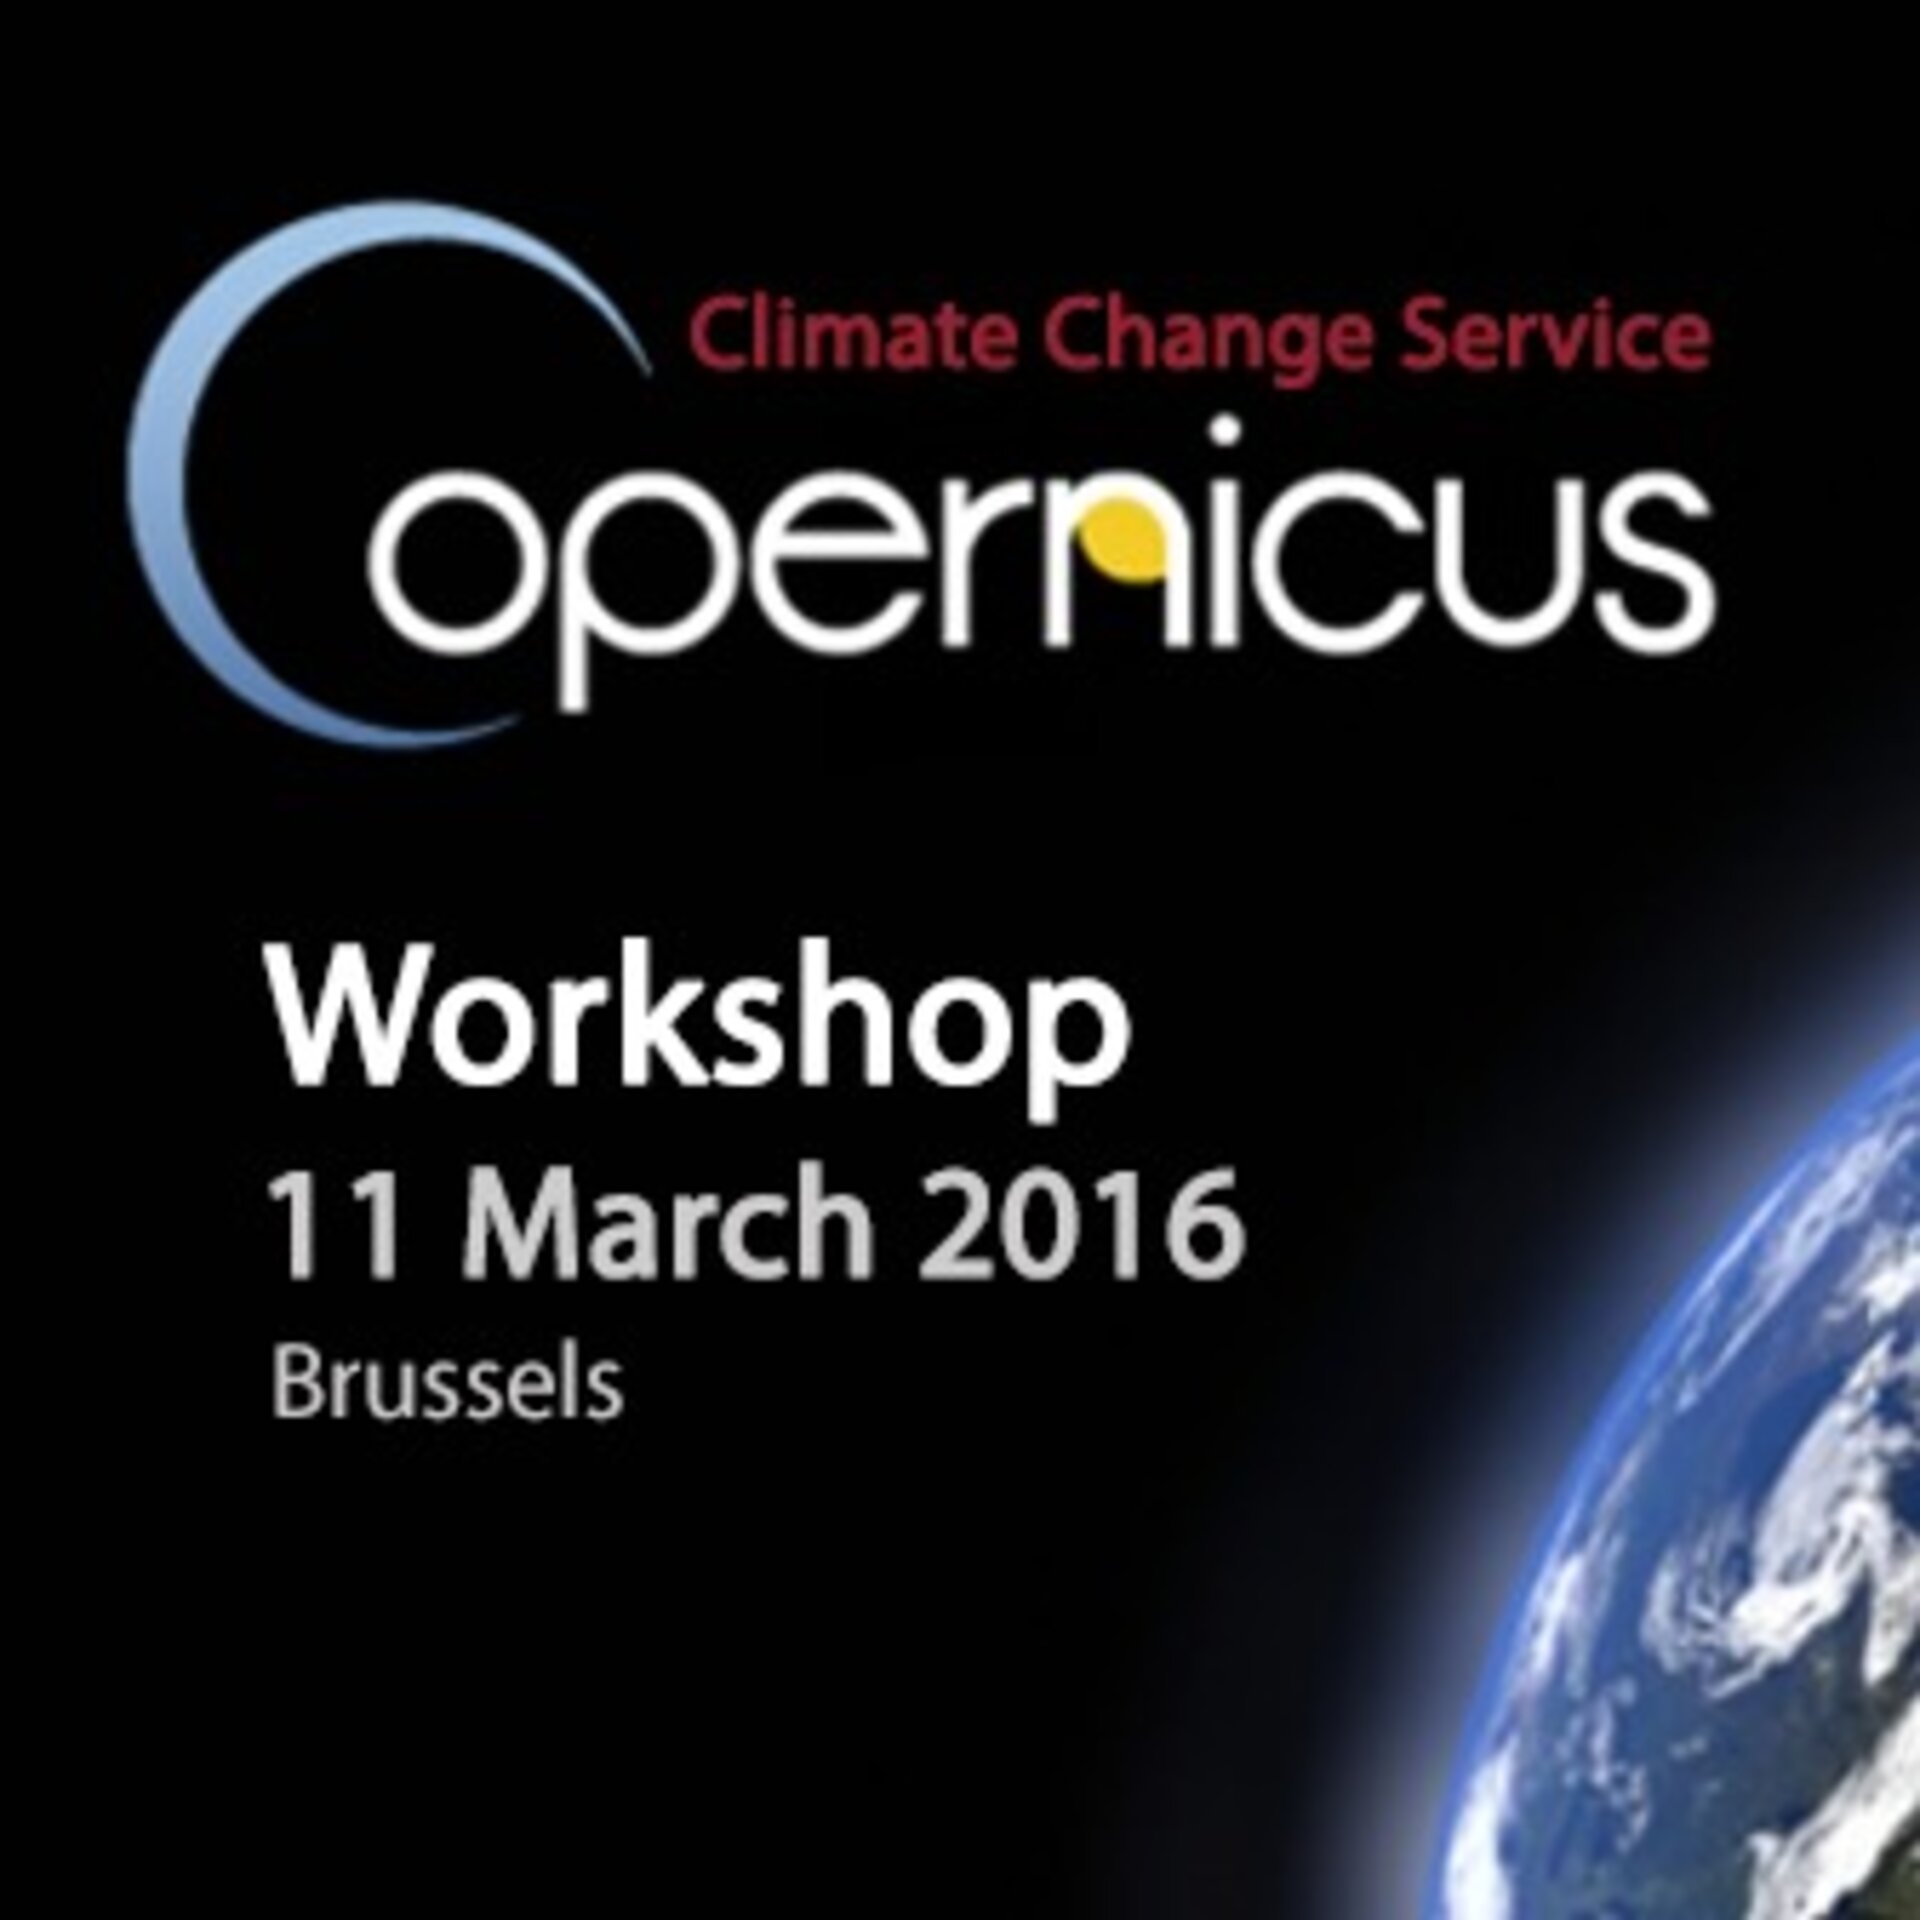 Copernicus Climate Change Service